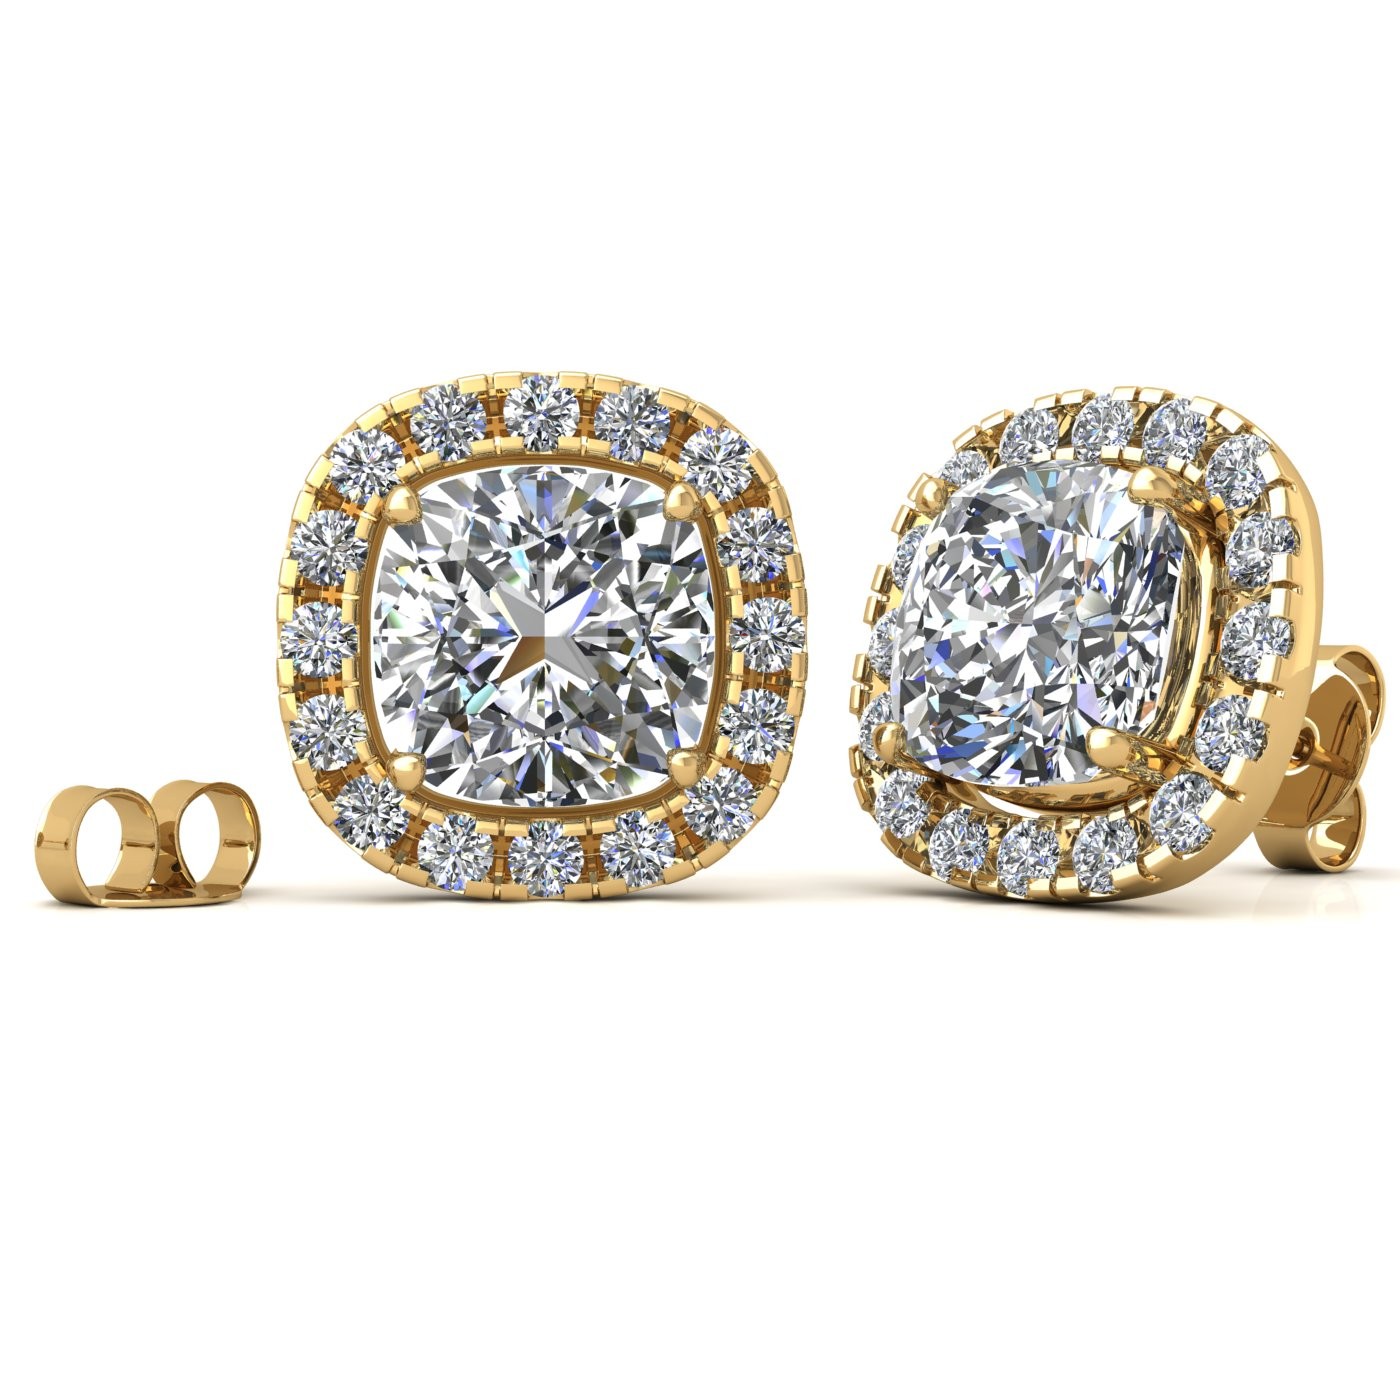 18k yellow gold 1,0 ct each (2,0 tcw) 4 prongs cushion shape diamond earrings with diamond pavÉ set halo Photos & images